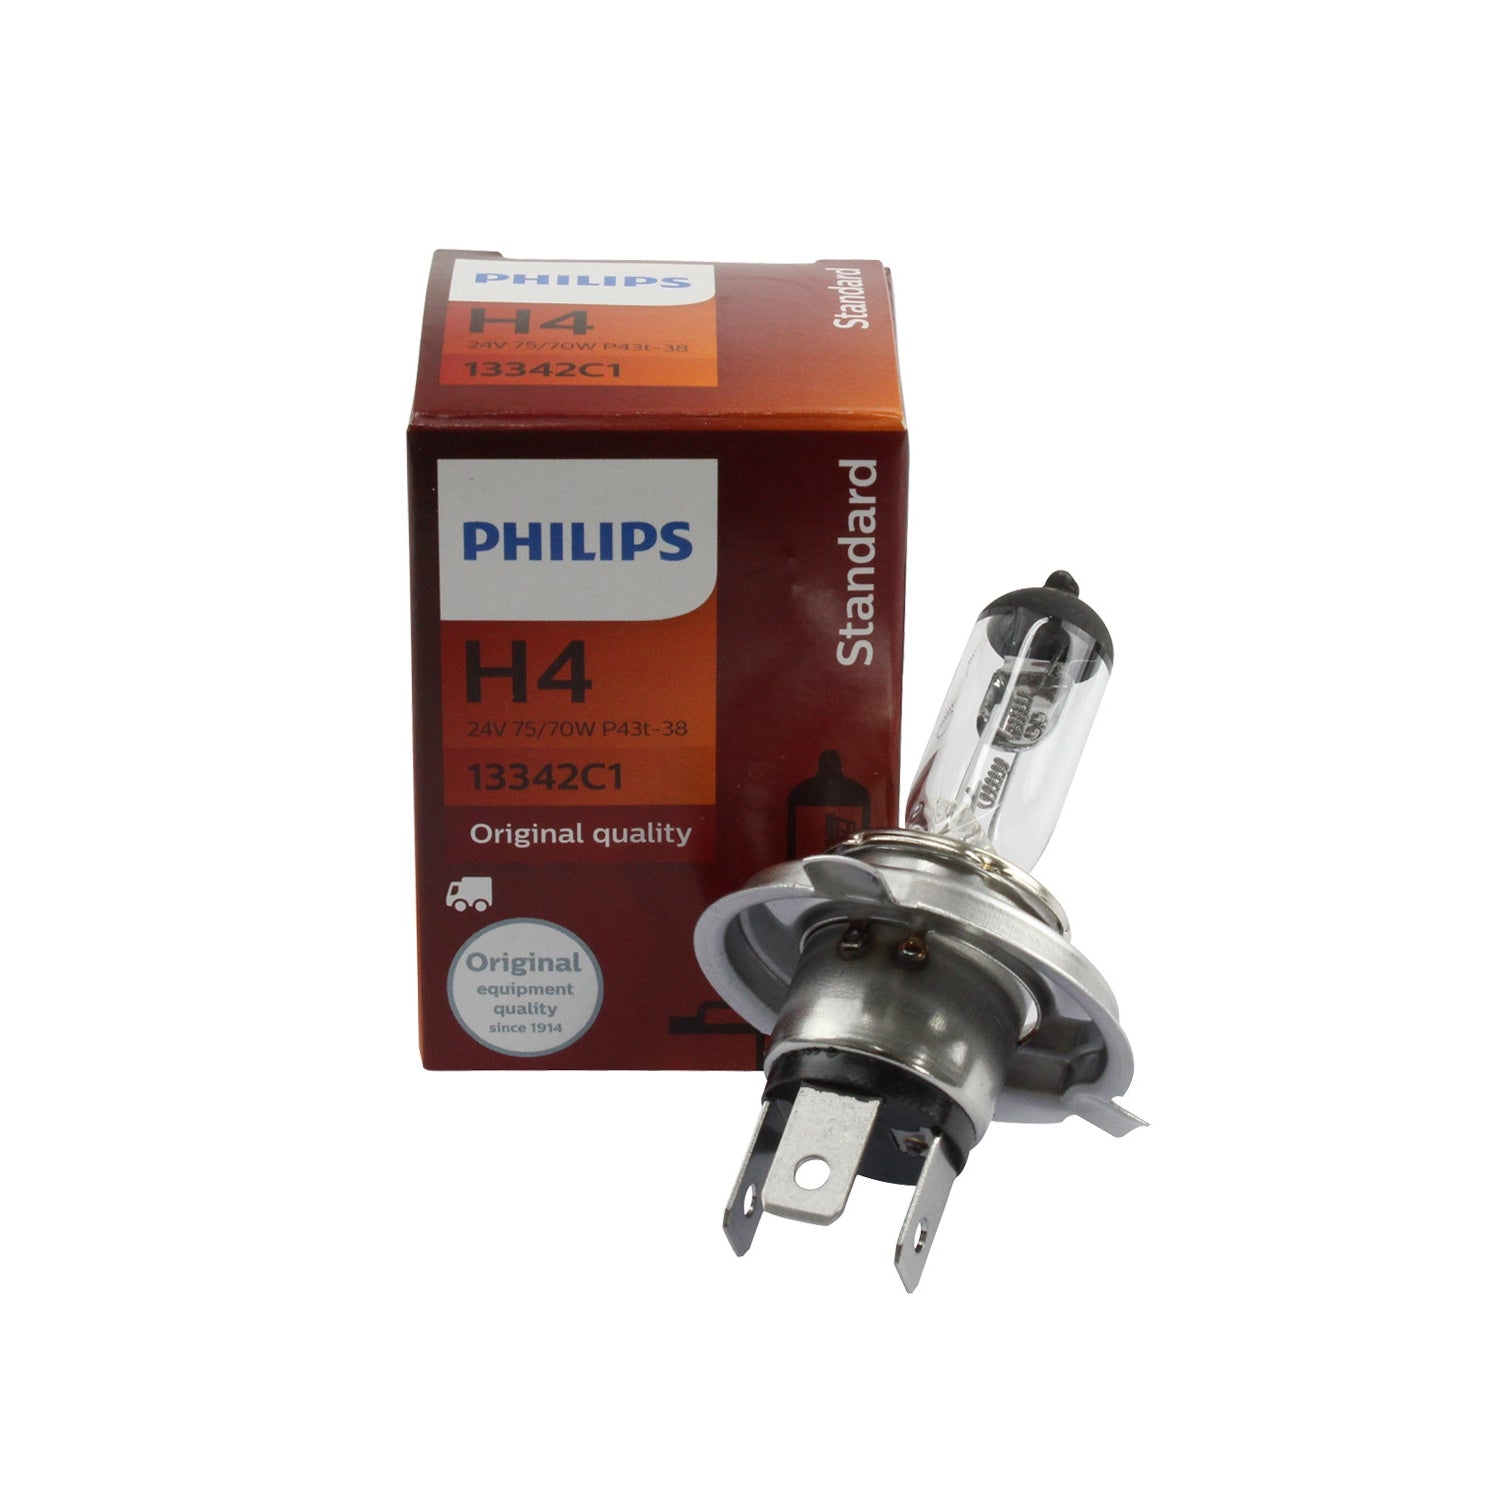 13342 Philips Halogen Globe/H4 24V 75/70W ST | Globes | Perth Pro Auto electric parts